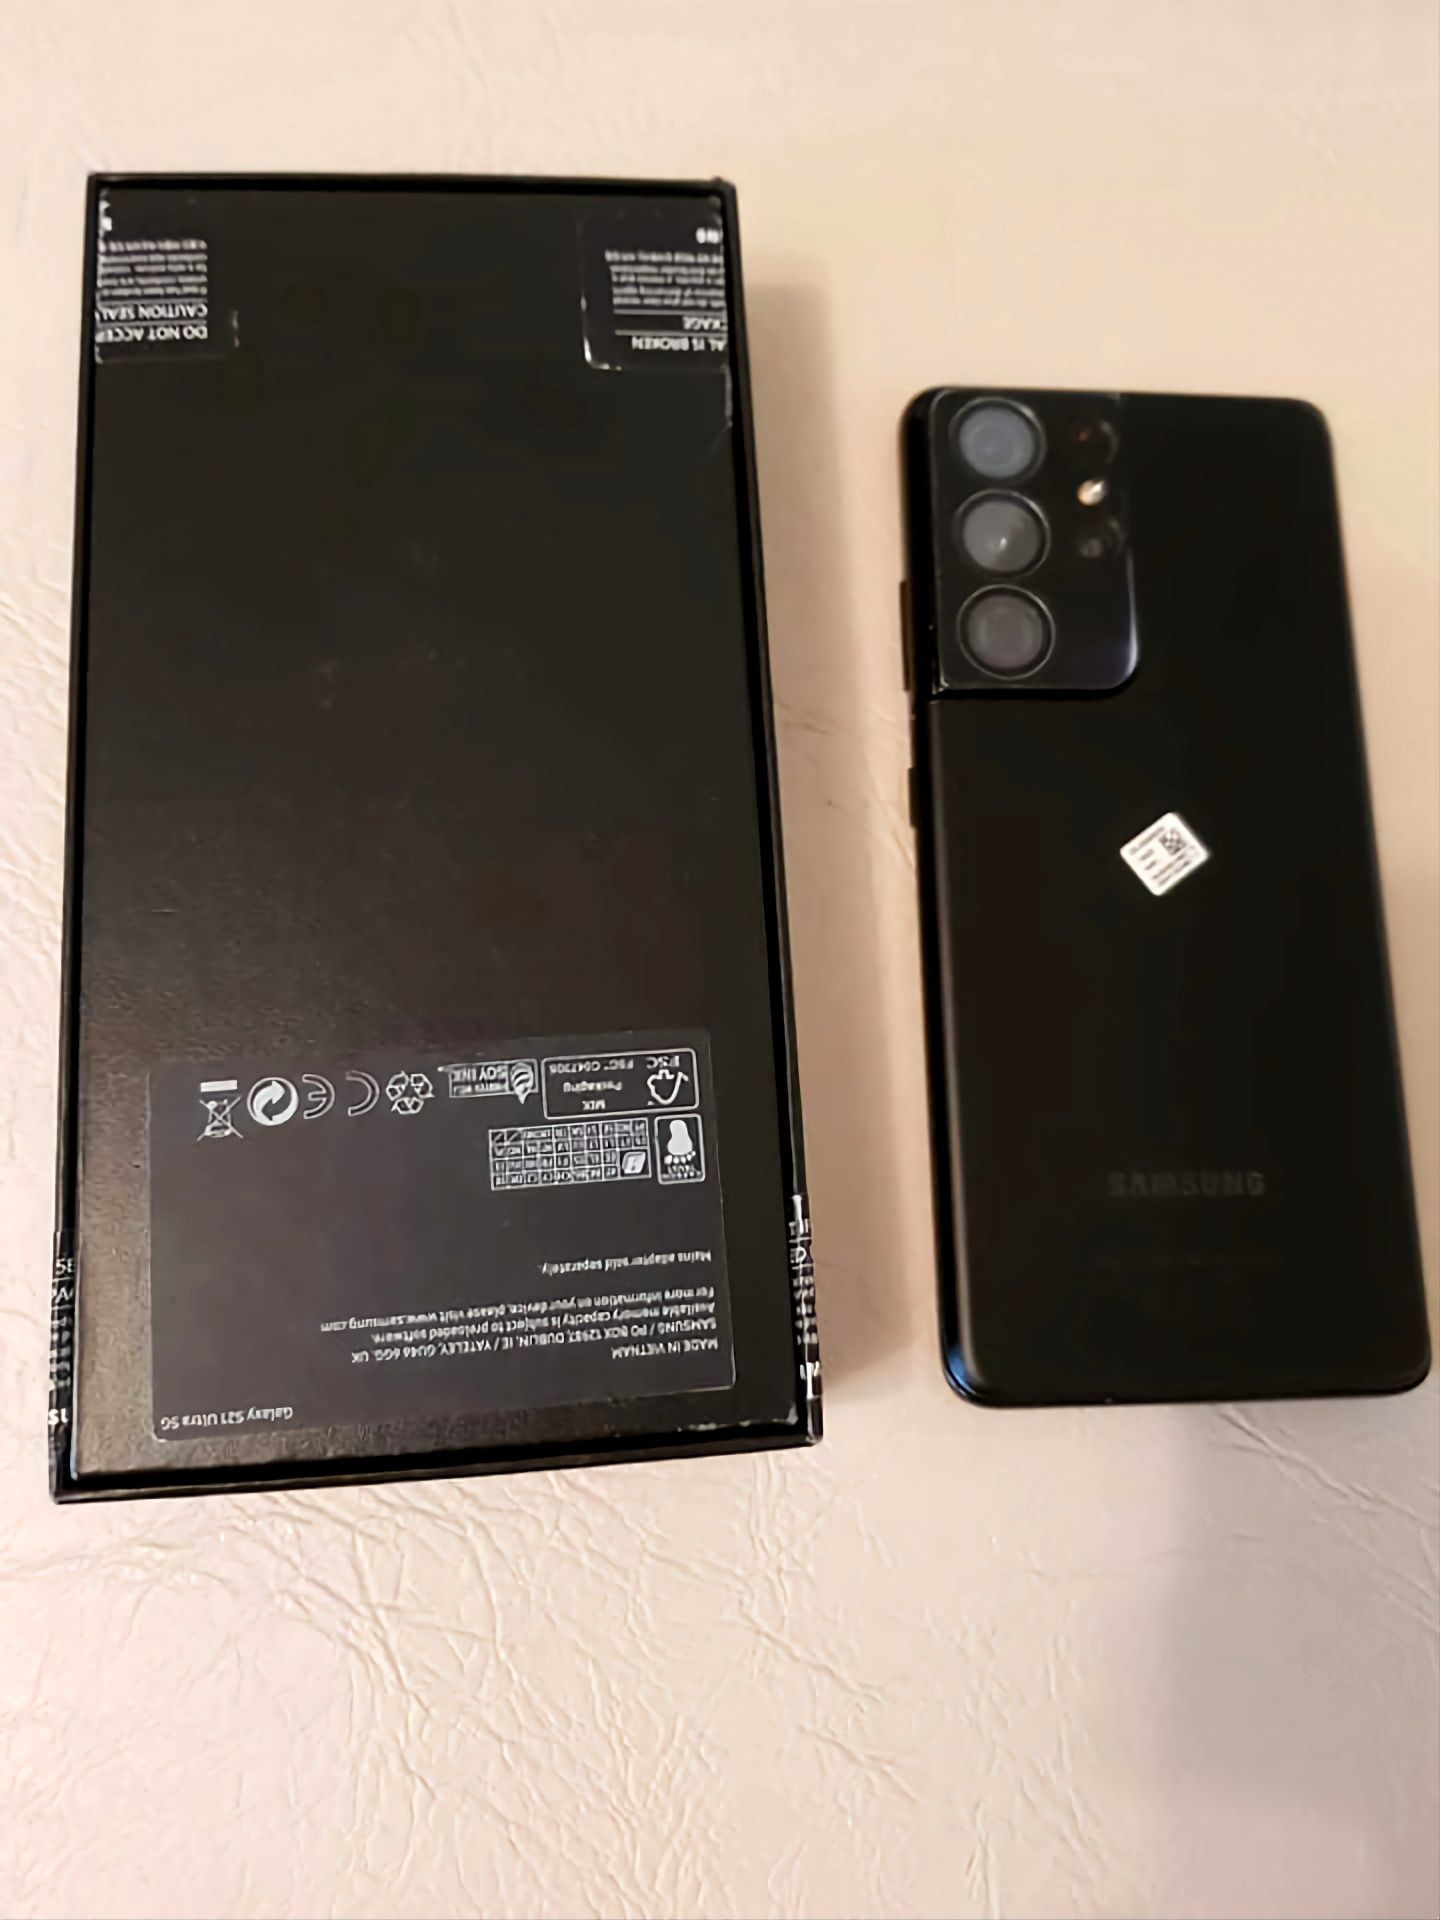 Samsung S21 Ultra+SPen